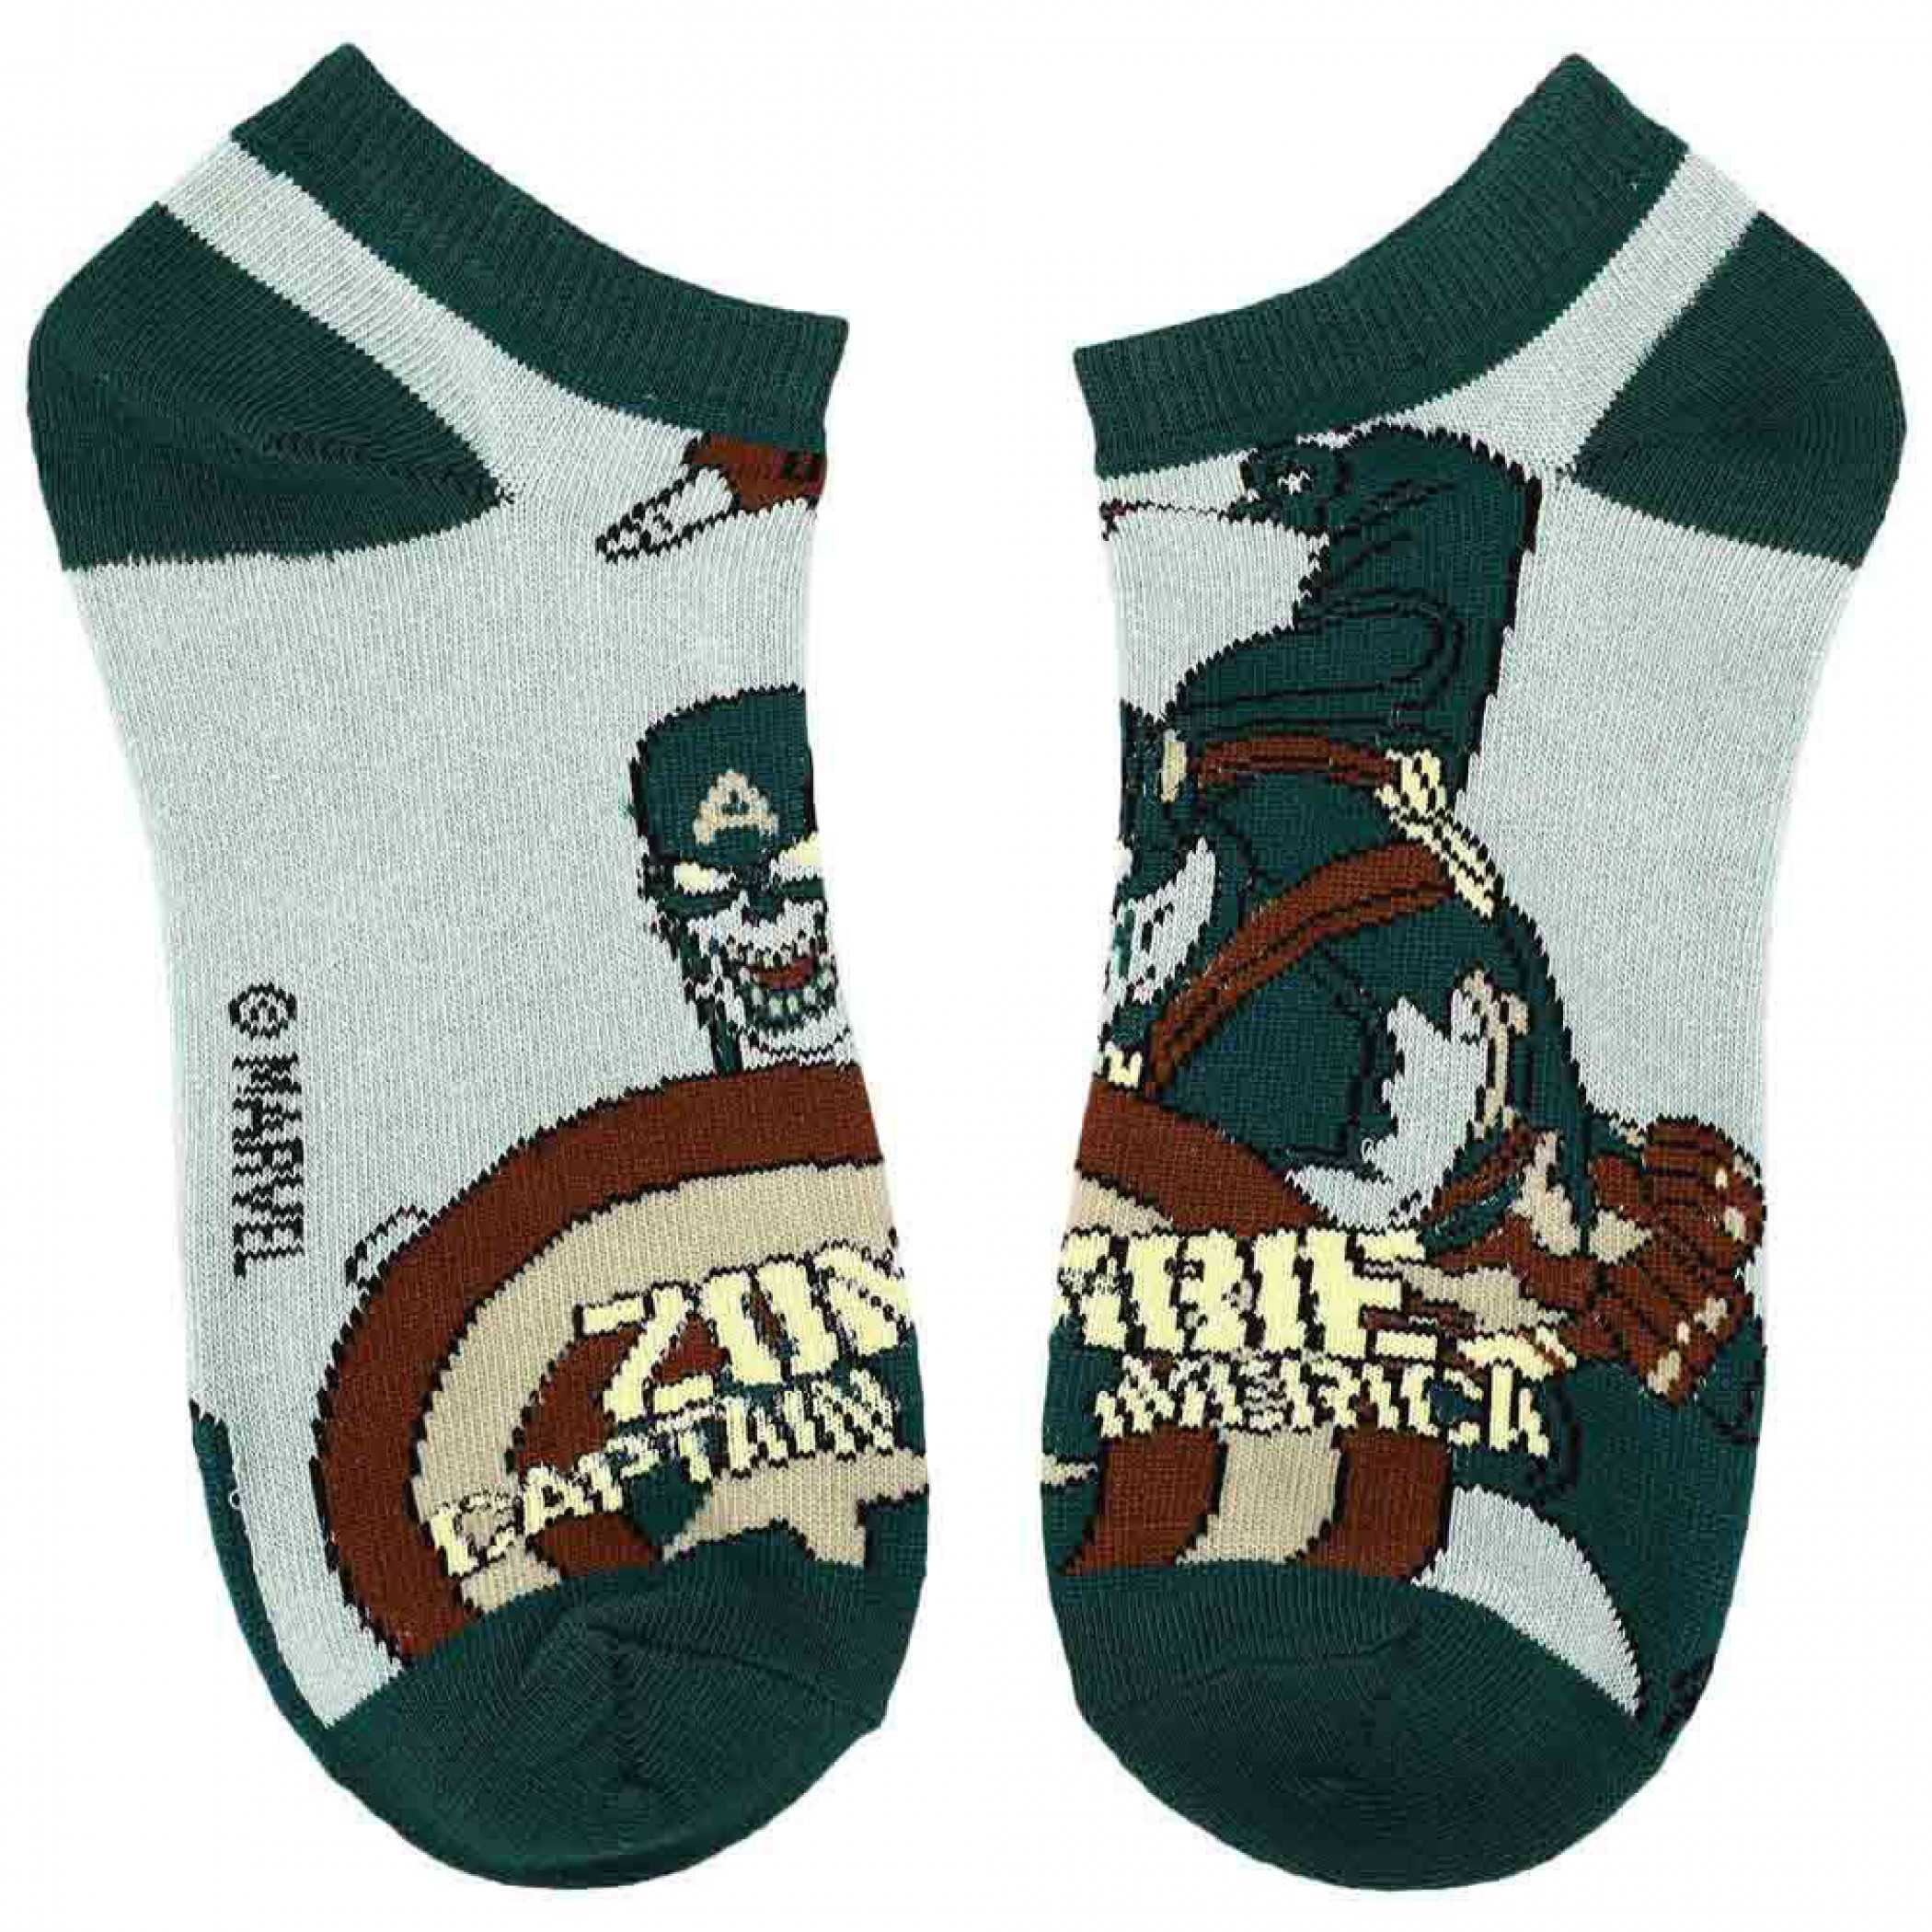 Marvel Comics What If...? Superhero Series 5-Pair Pack of Ankle Socks